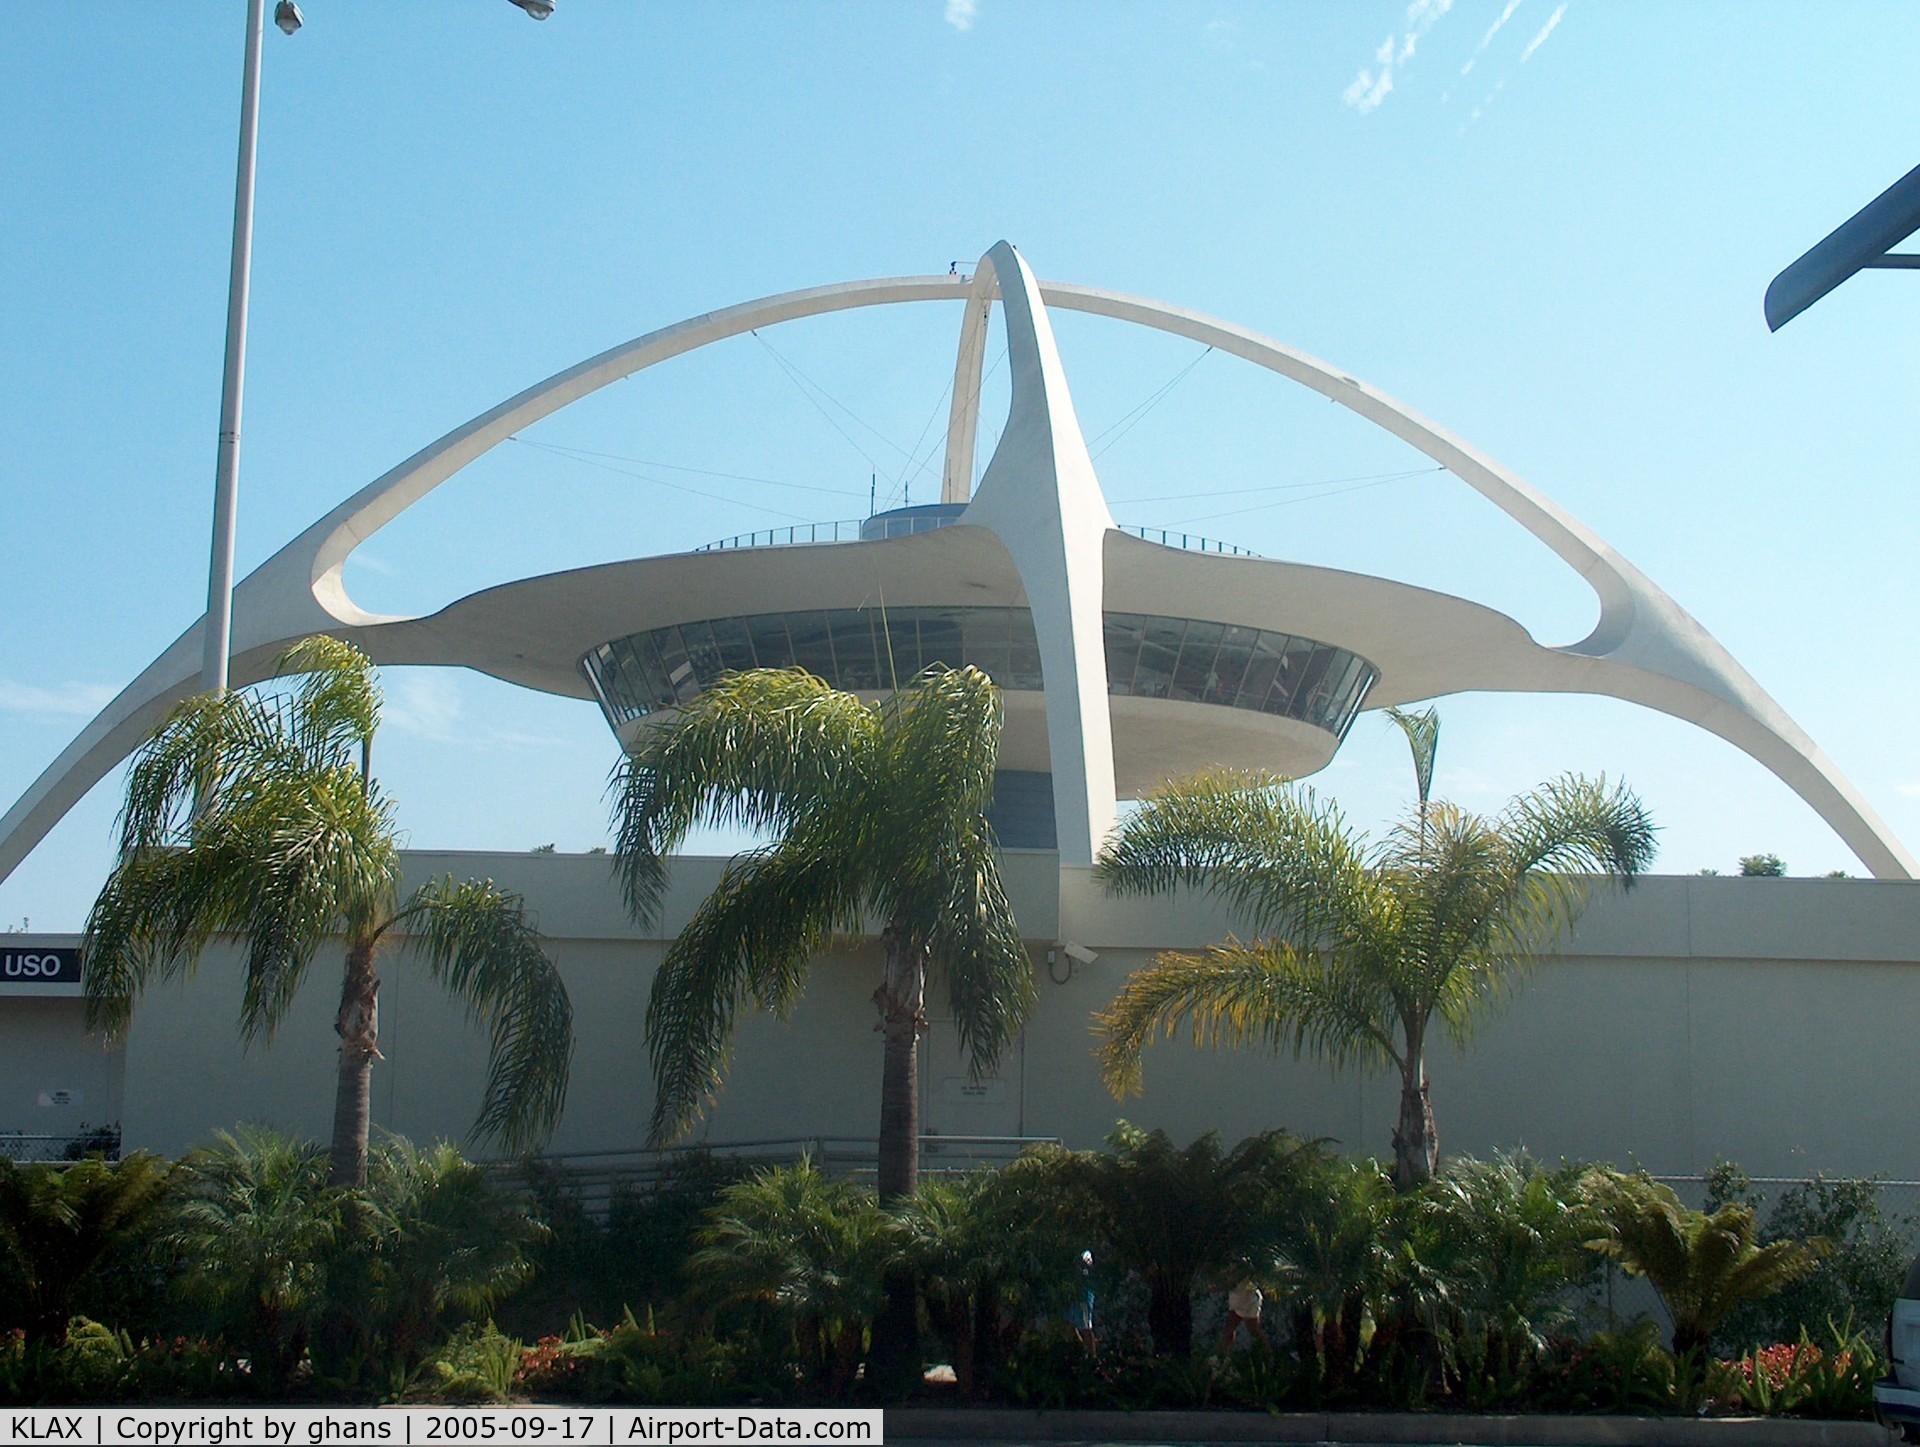 Los Angeles International Airport (LAX) - Spider